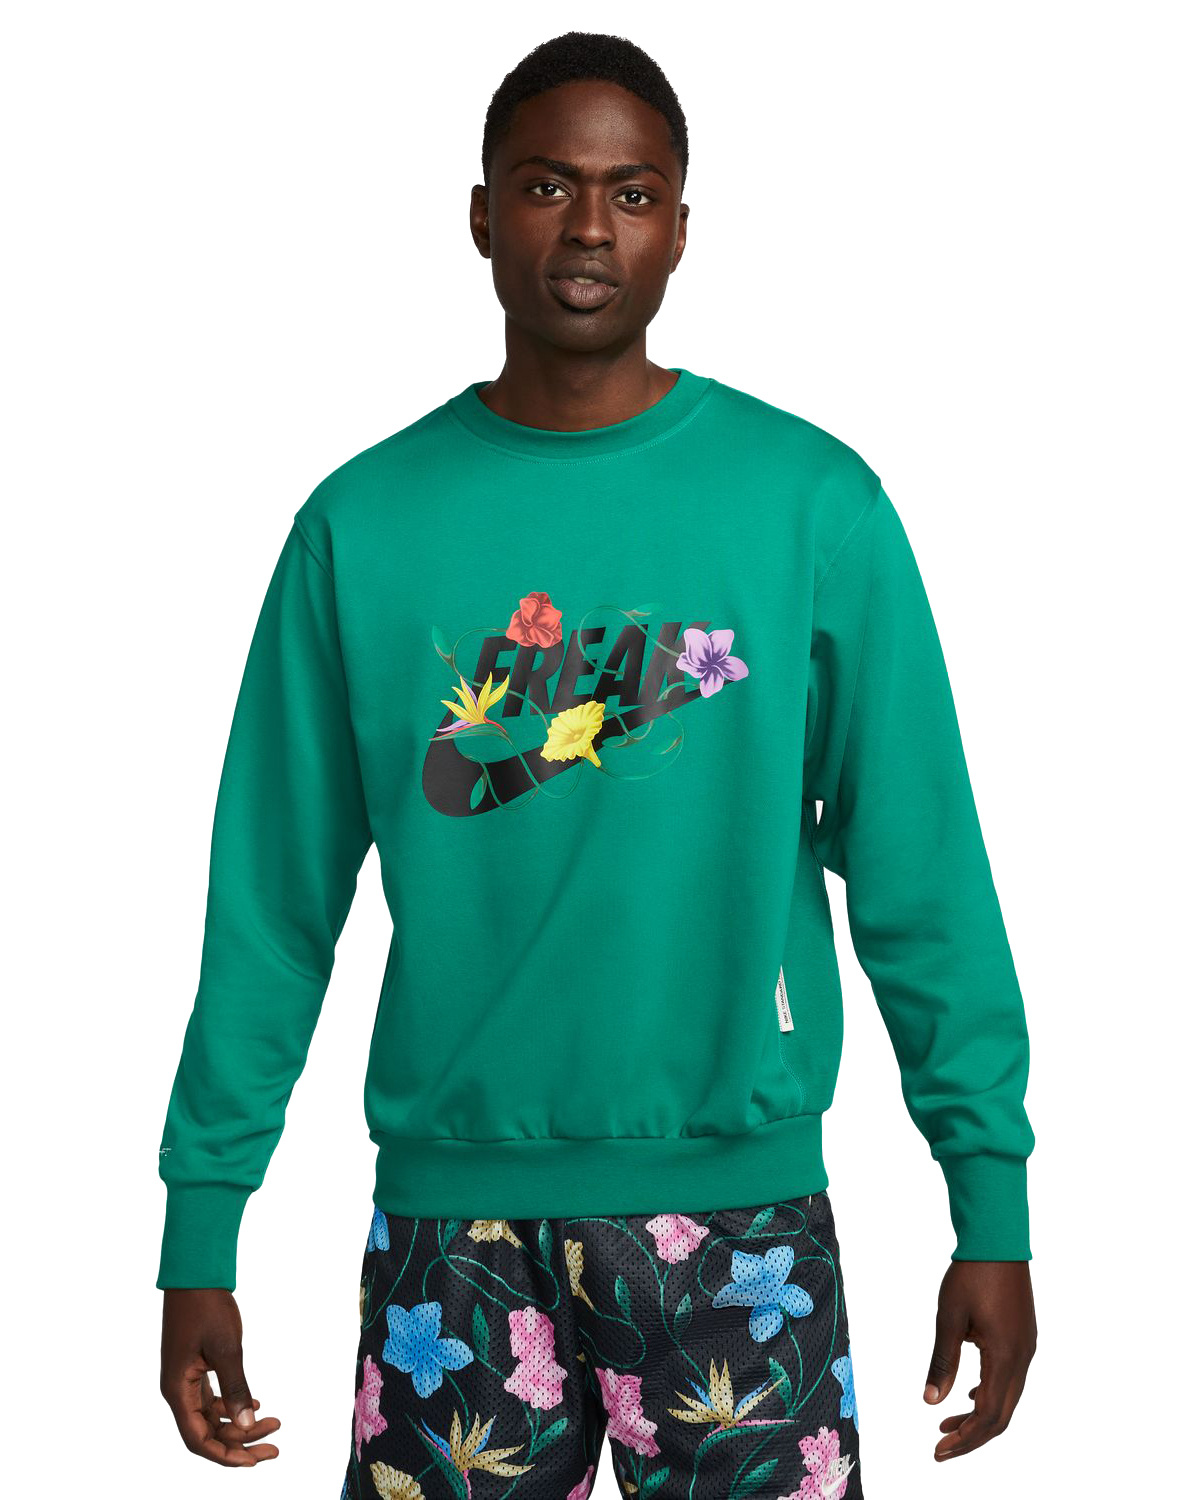 Freak Nike Giannis Antetokounmpo Shirt, hoodie, sweater, long sleeve and  tank top